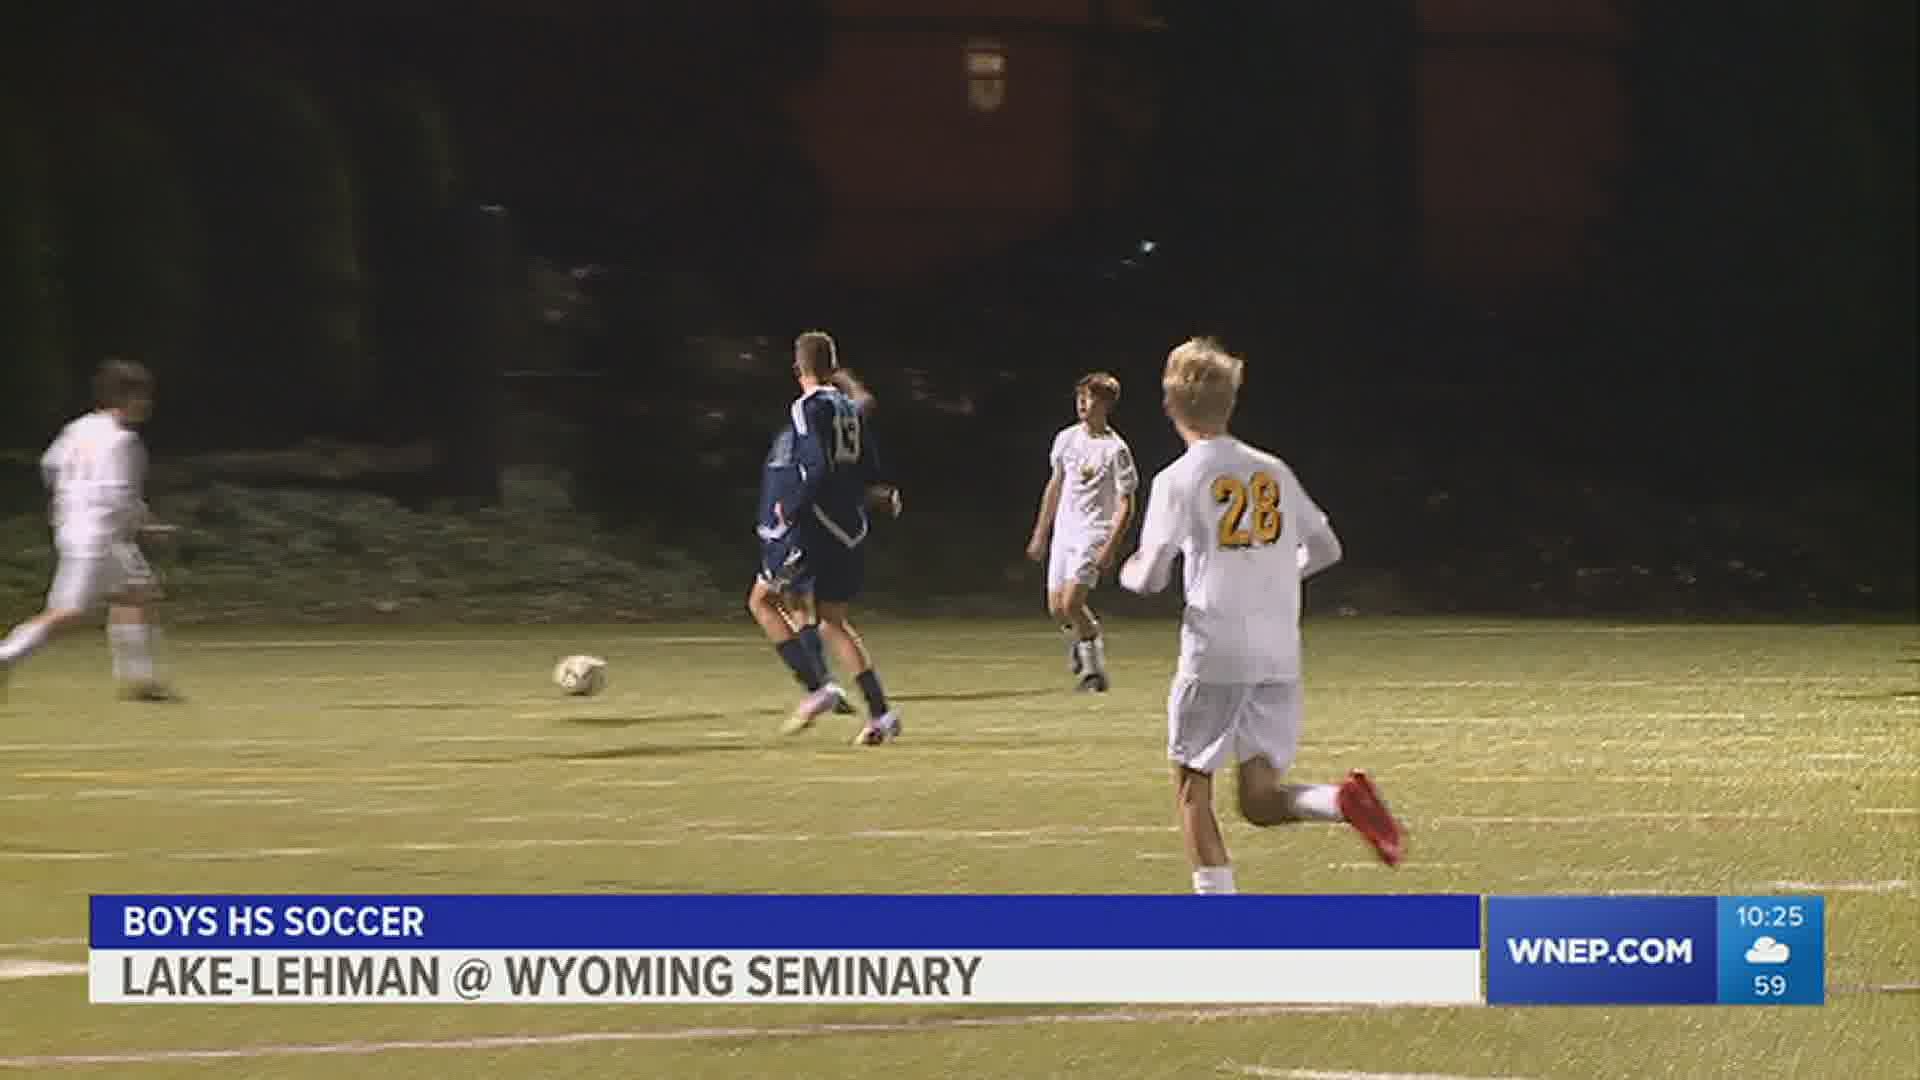 Wyoming Seminary defeats Lake-Lehman 2-0 in boys HS soccer